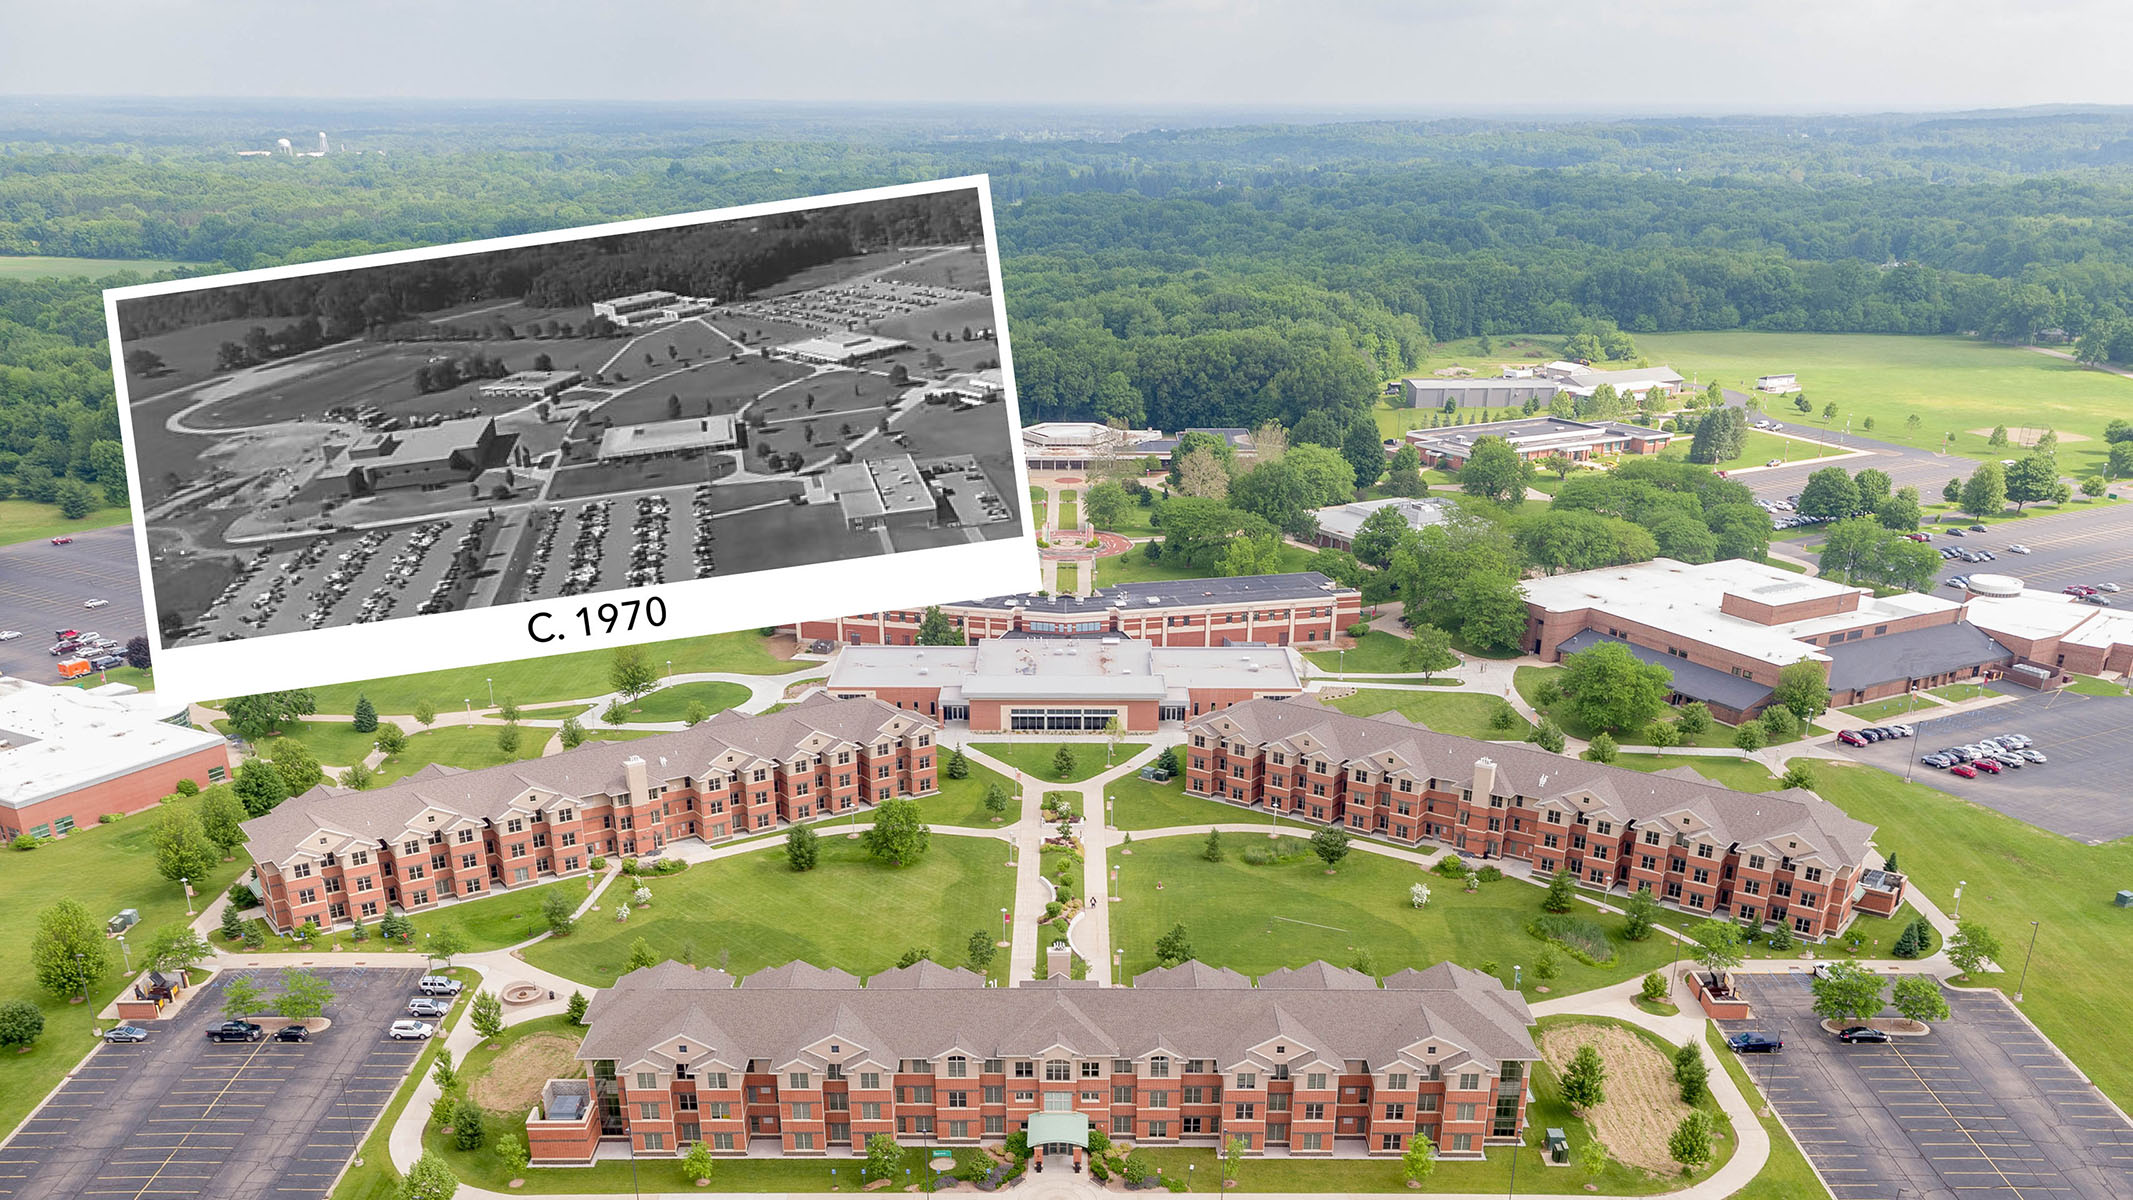 Campus in 1970 versus today